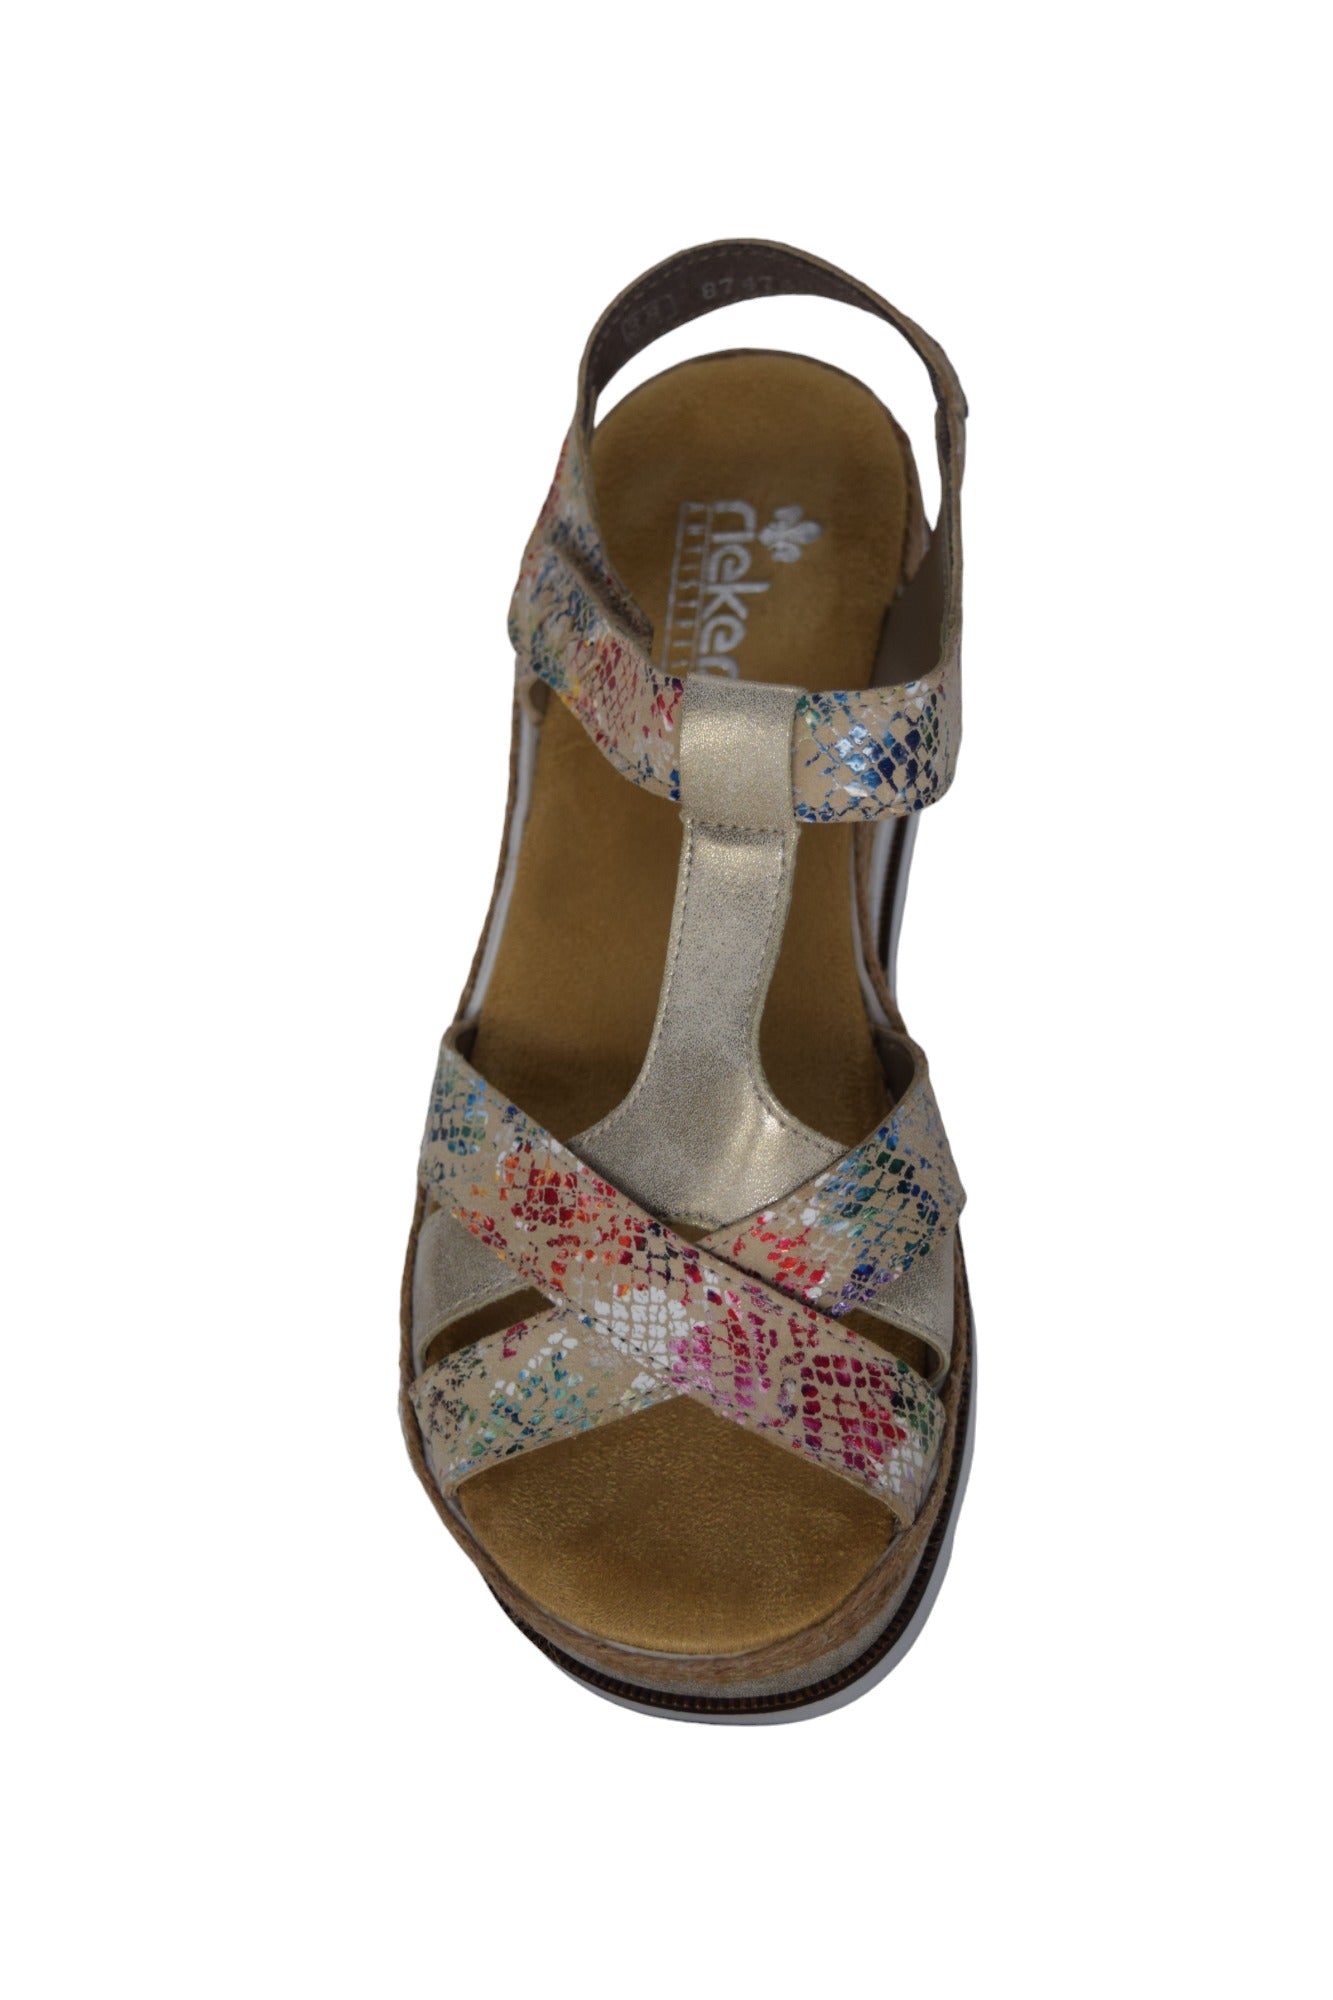 Rieker Raina Velcro Strap Sandal - Women's